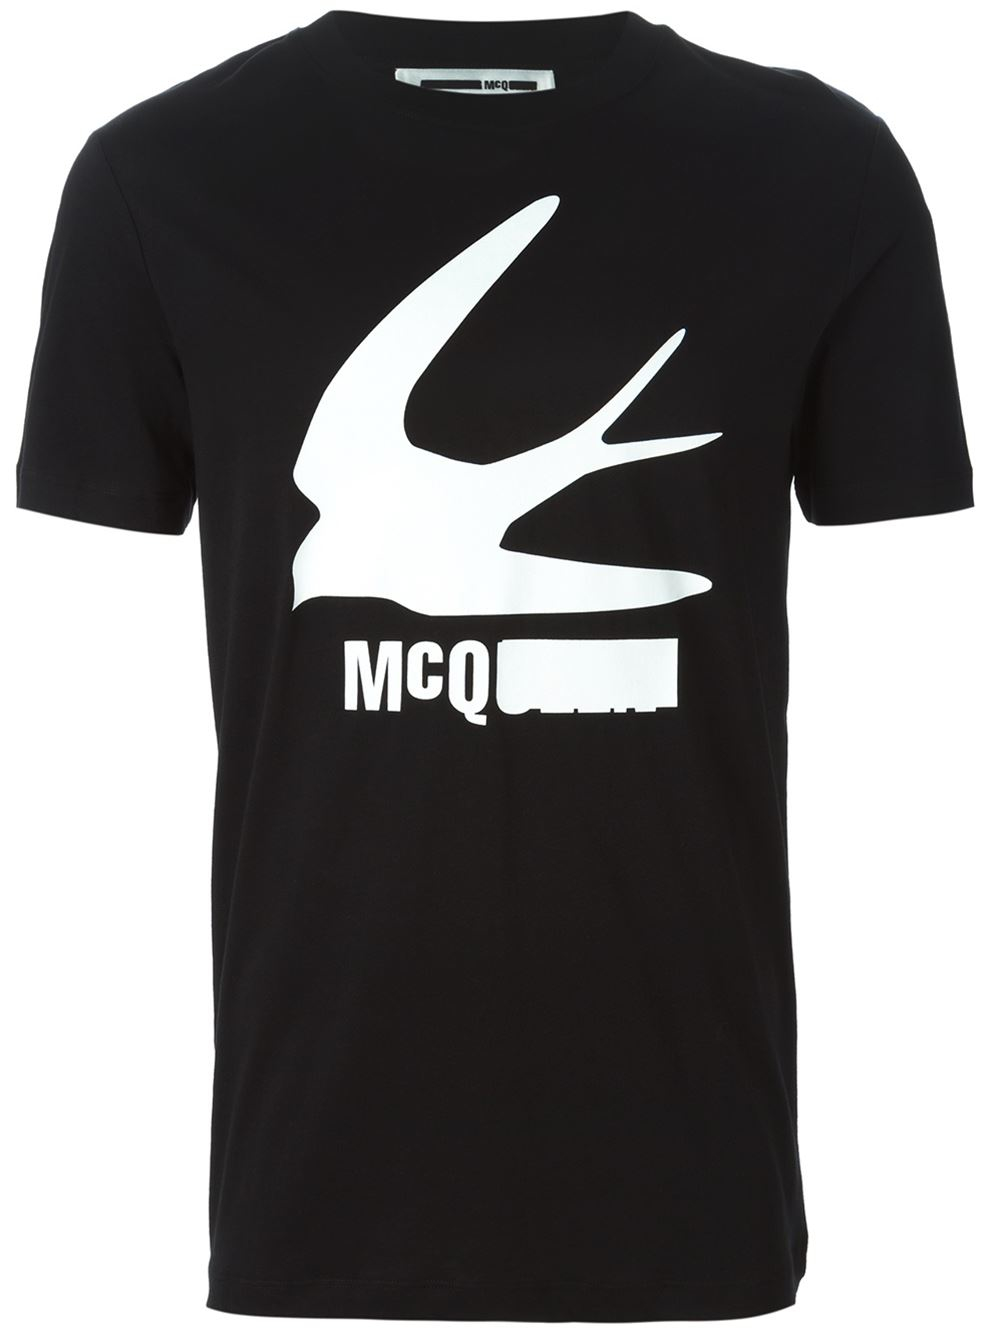 Mcq alexander mcqueen Printed T-shirt in Black for Men | Lyst